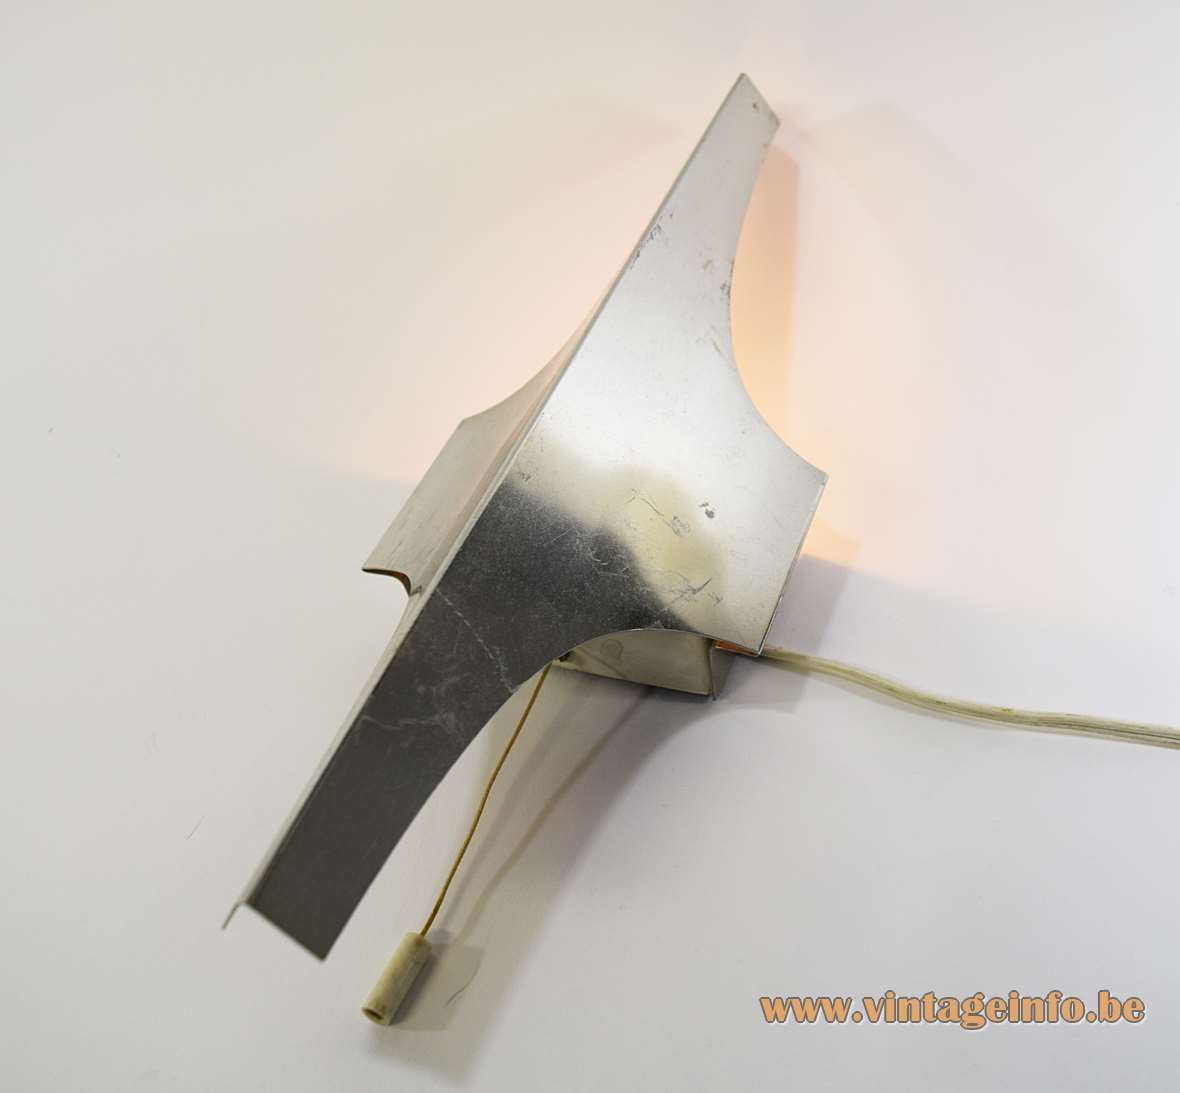 DORIA aluminium wall lamp elongated spiky metal lampshade E14 lamp socket Doria Leuchten Germany 1960s 1970s